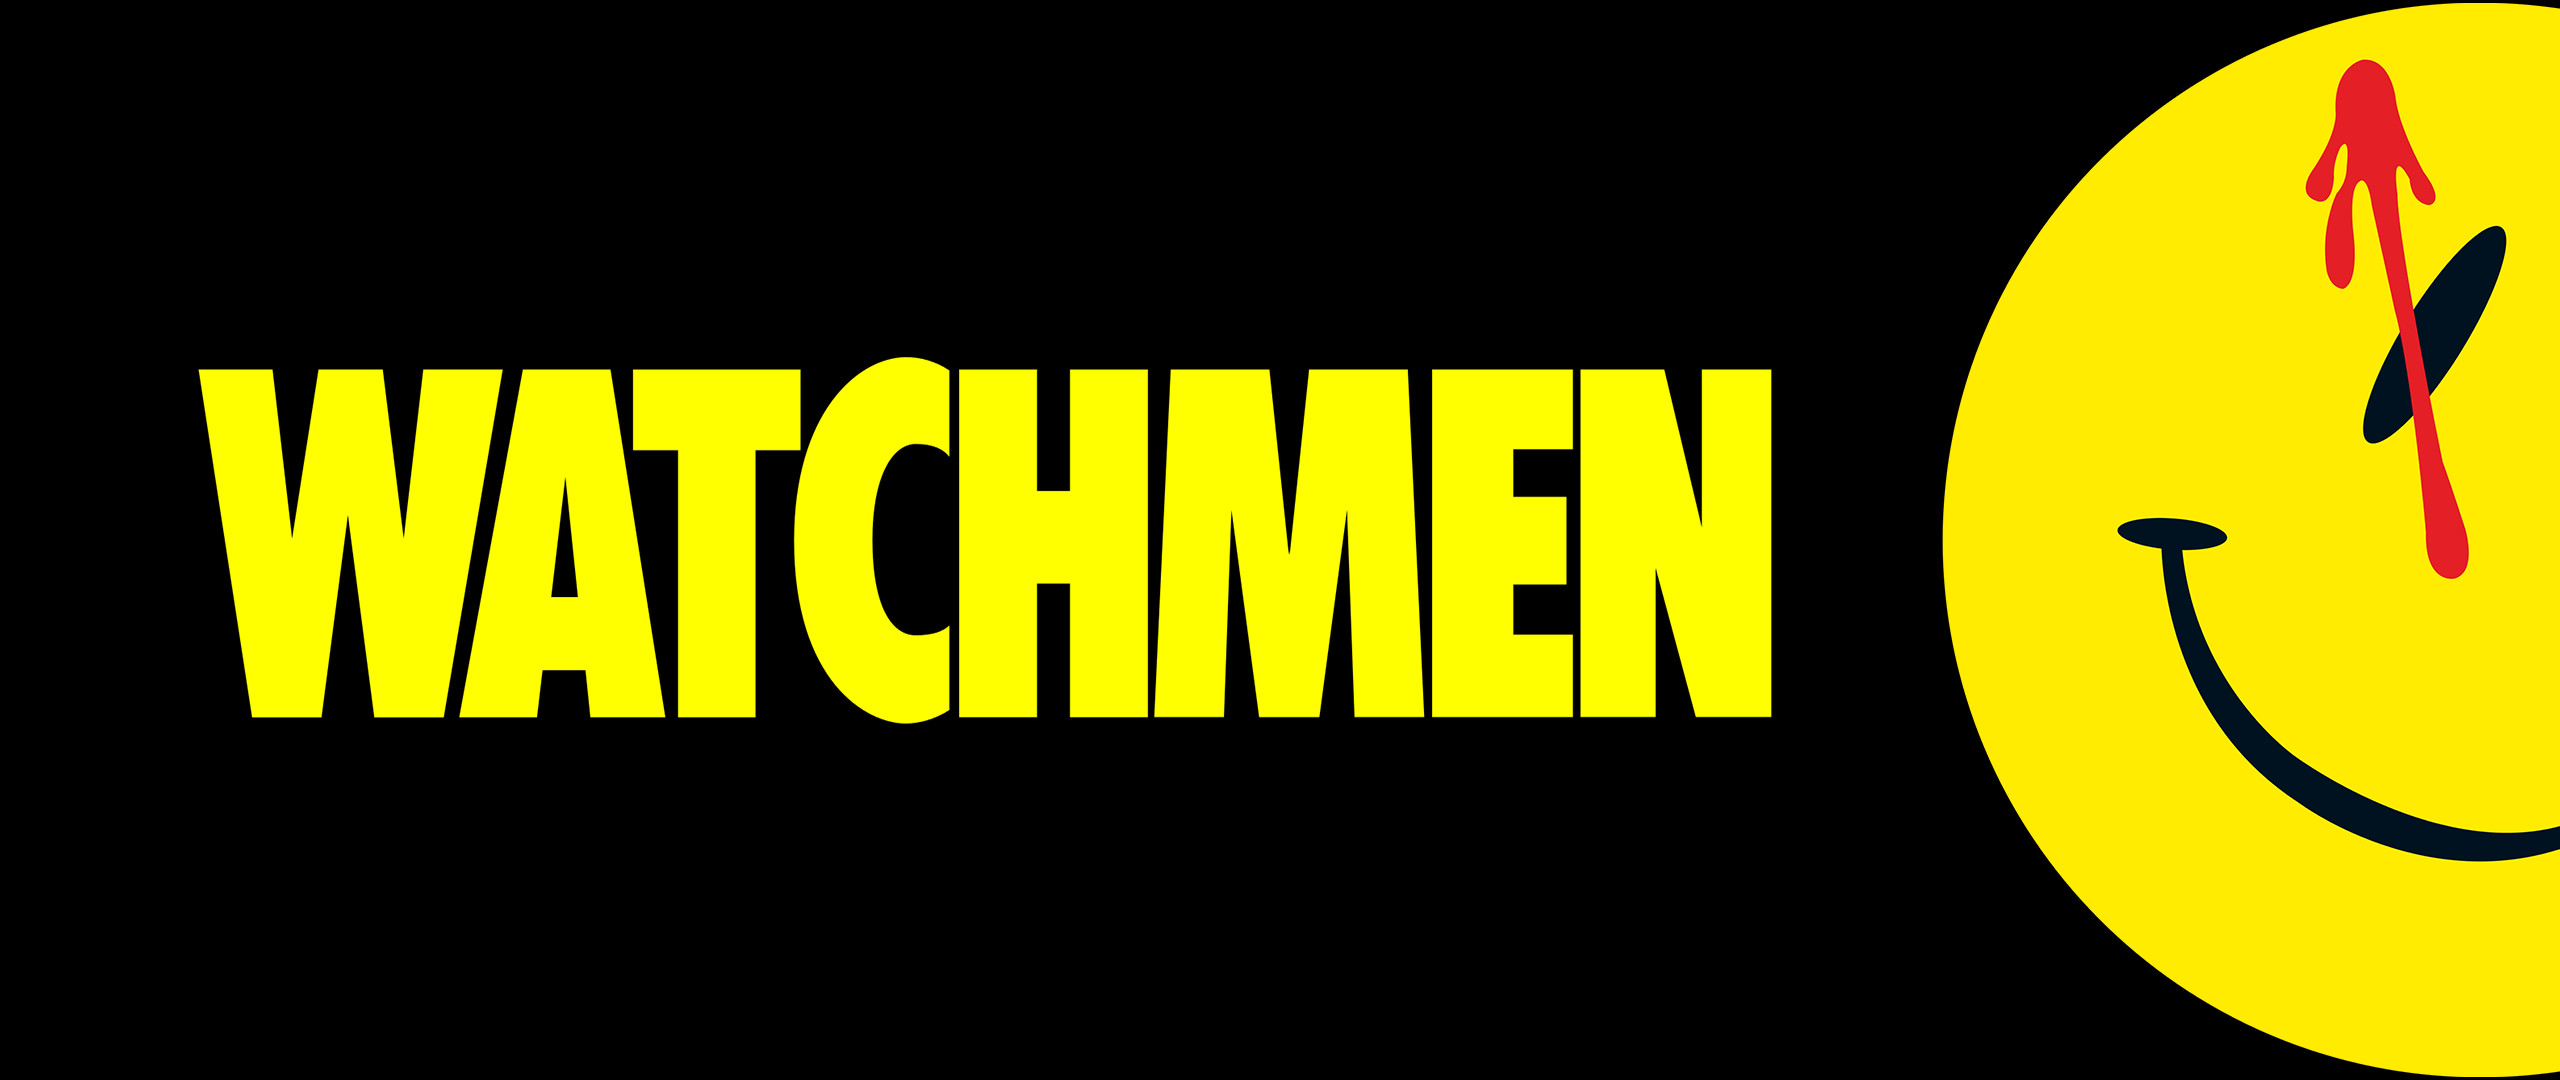 2560x1080 Watchmen wallpaper by Rubenmanzano Watchmen wallpaper by Rubenmanzano